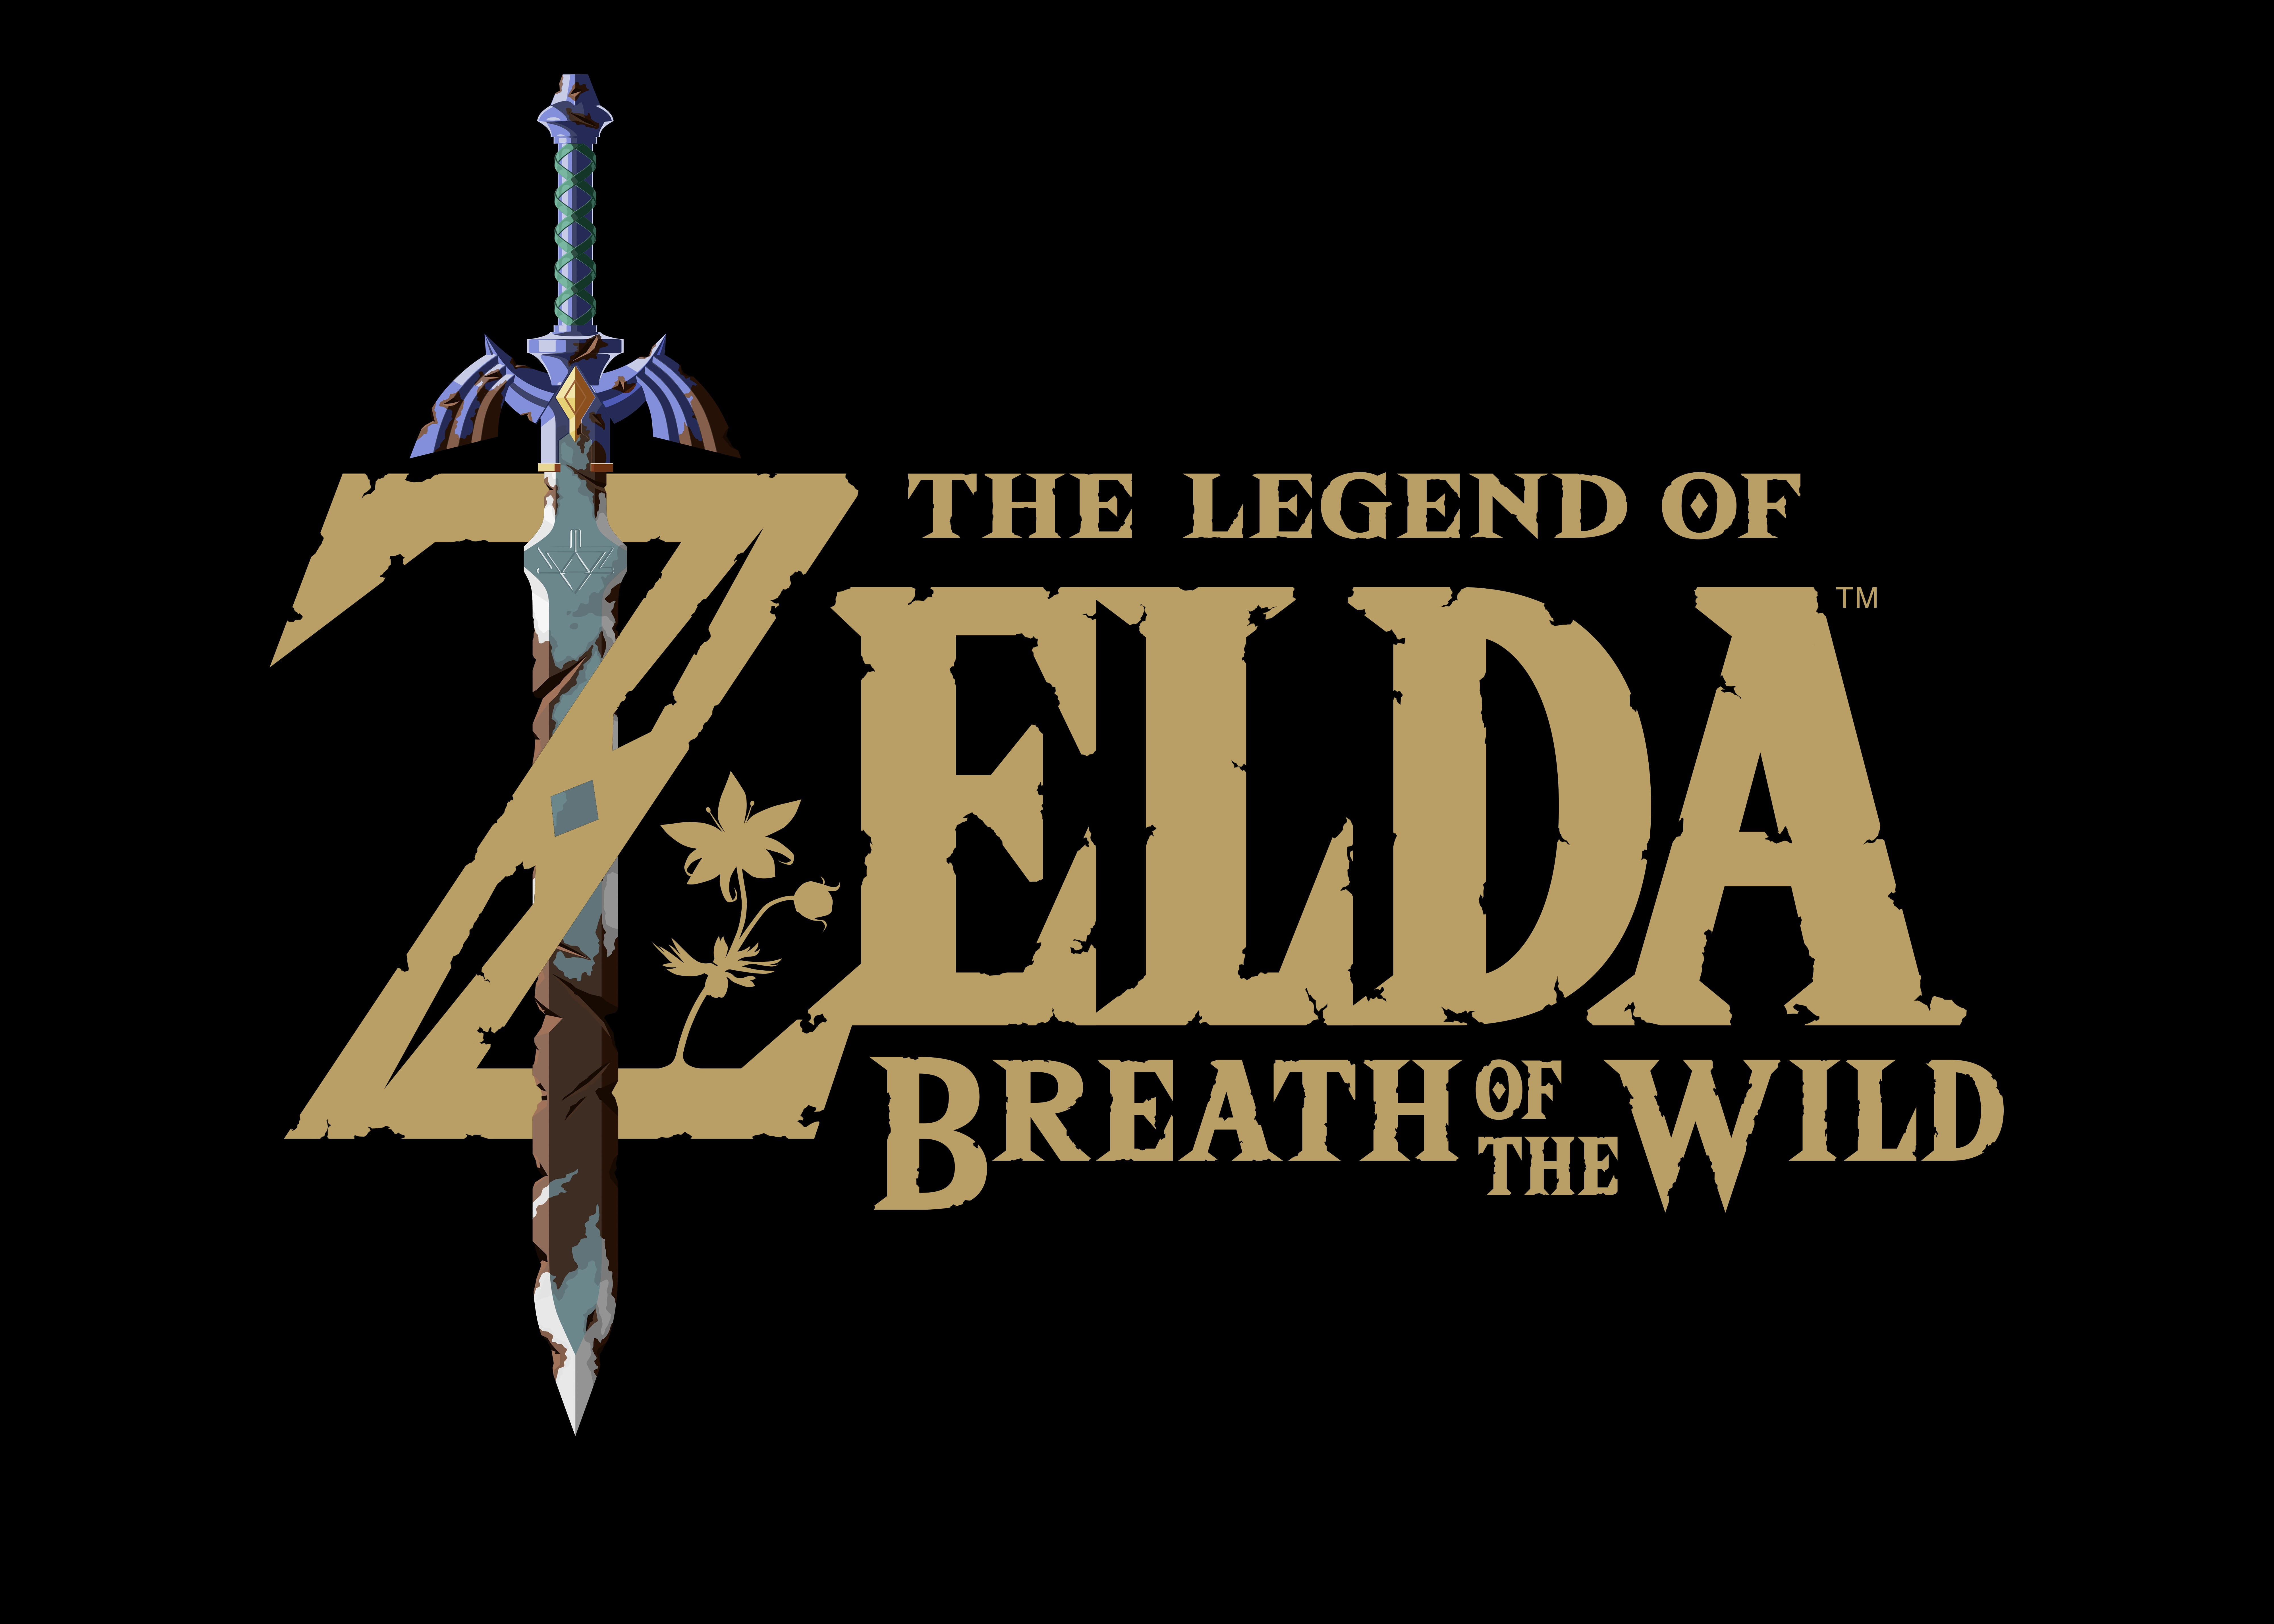 The Legend of Zelda Breath of the Wild logo, The Legend of Zelda: Breath of the Wild